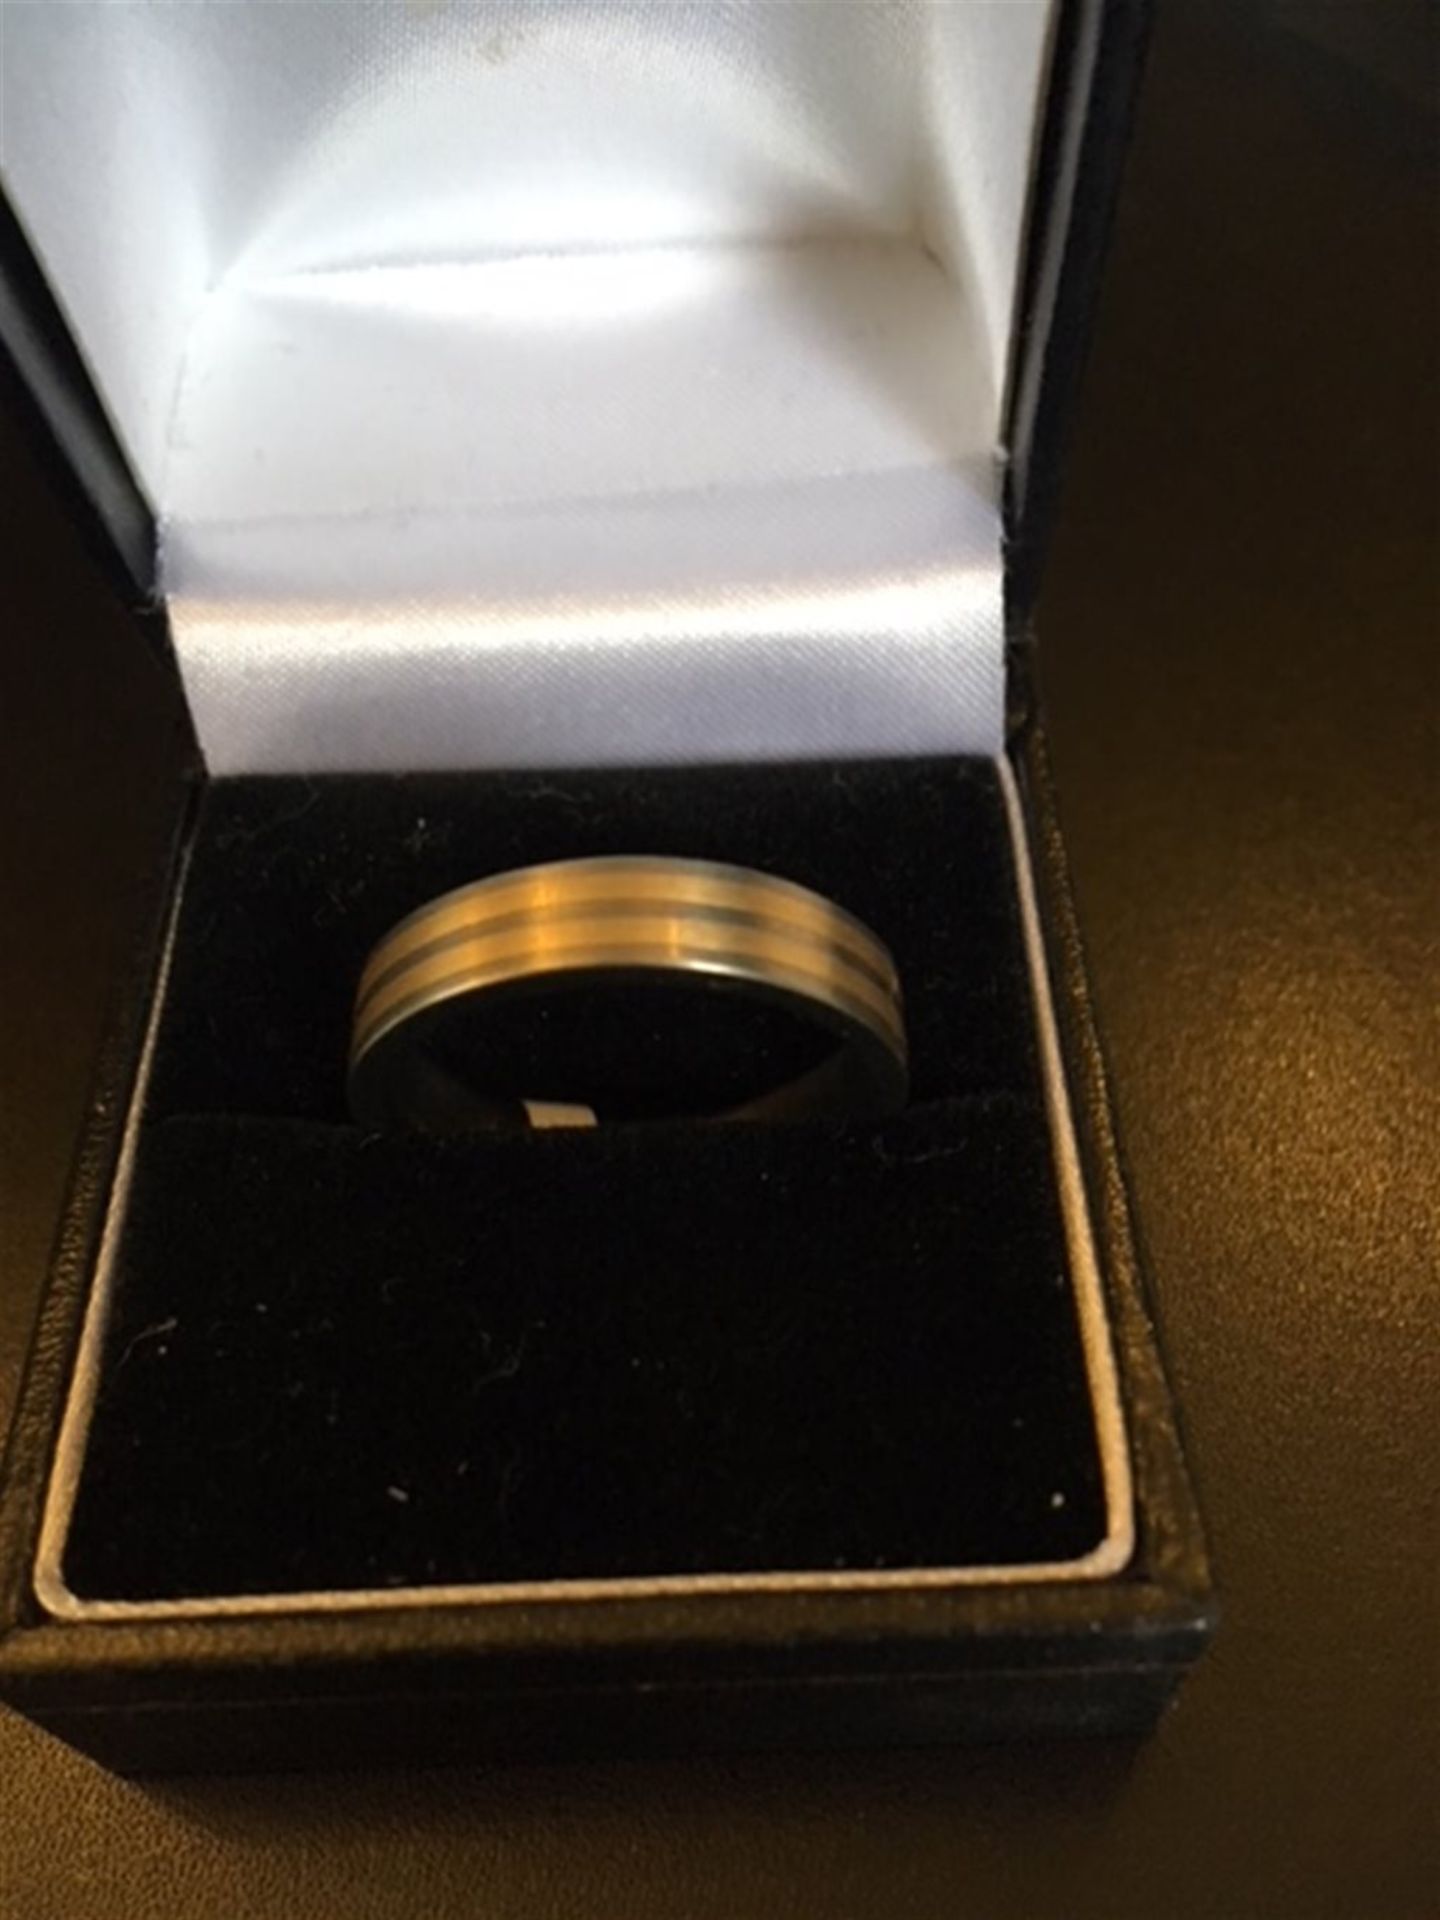 6mm Gold wedding ring - Image 2 of 2